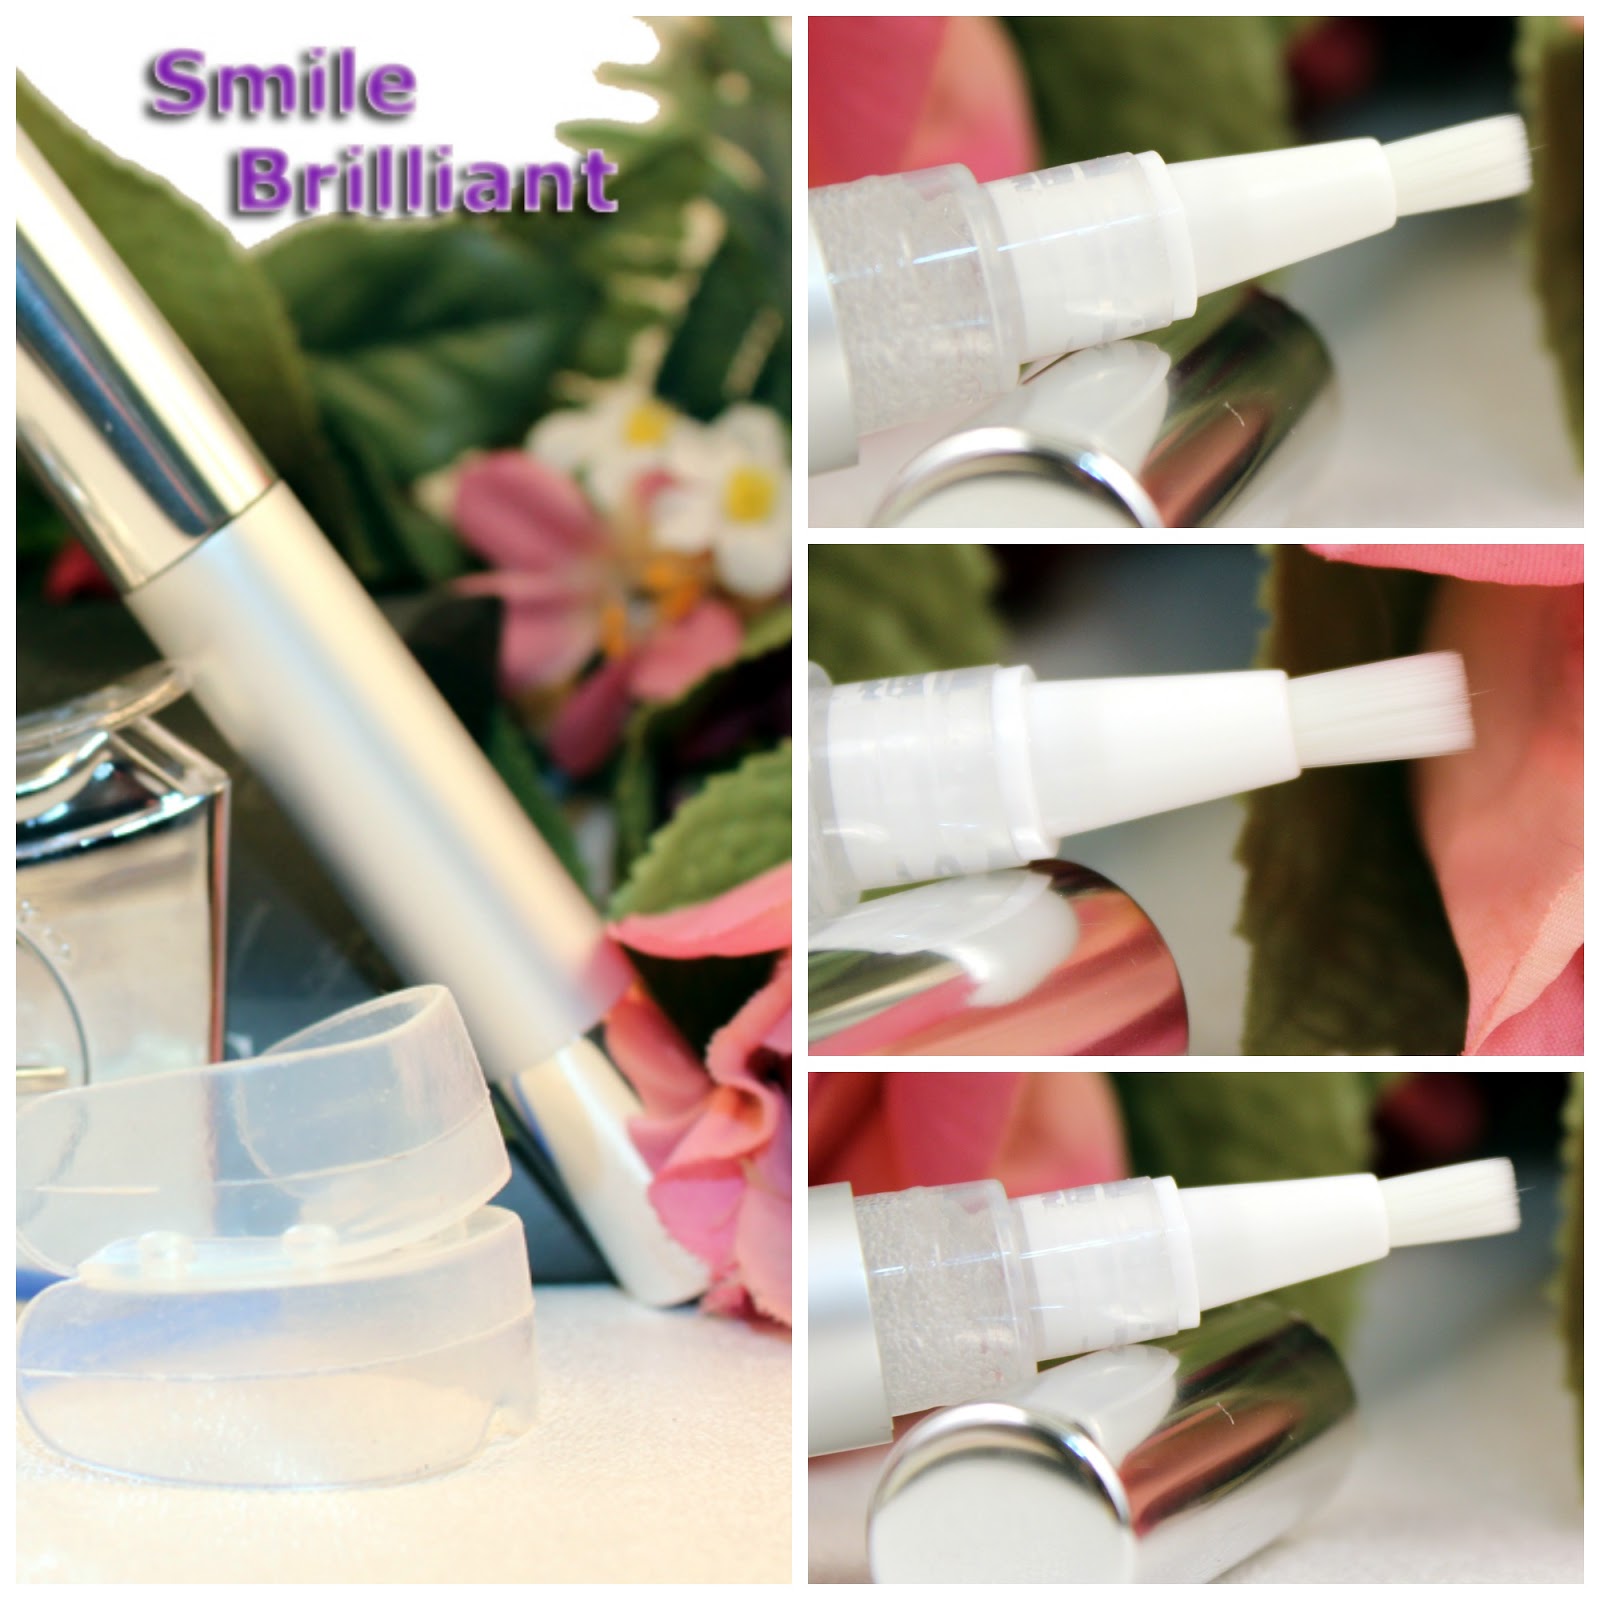 Smile Brilliant Professional Teeth Whitening System